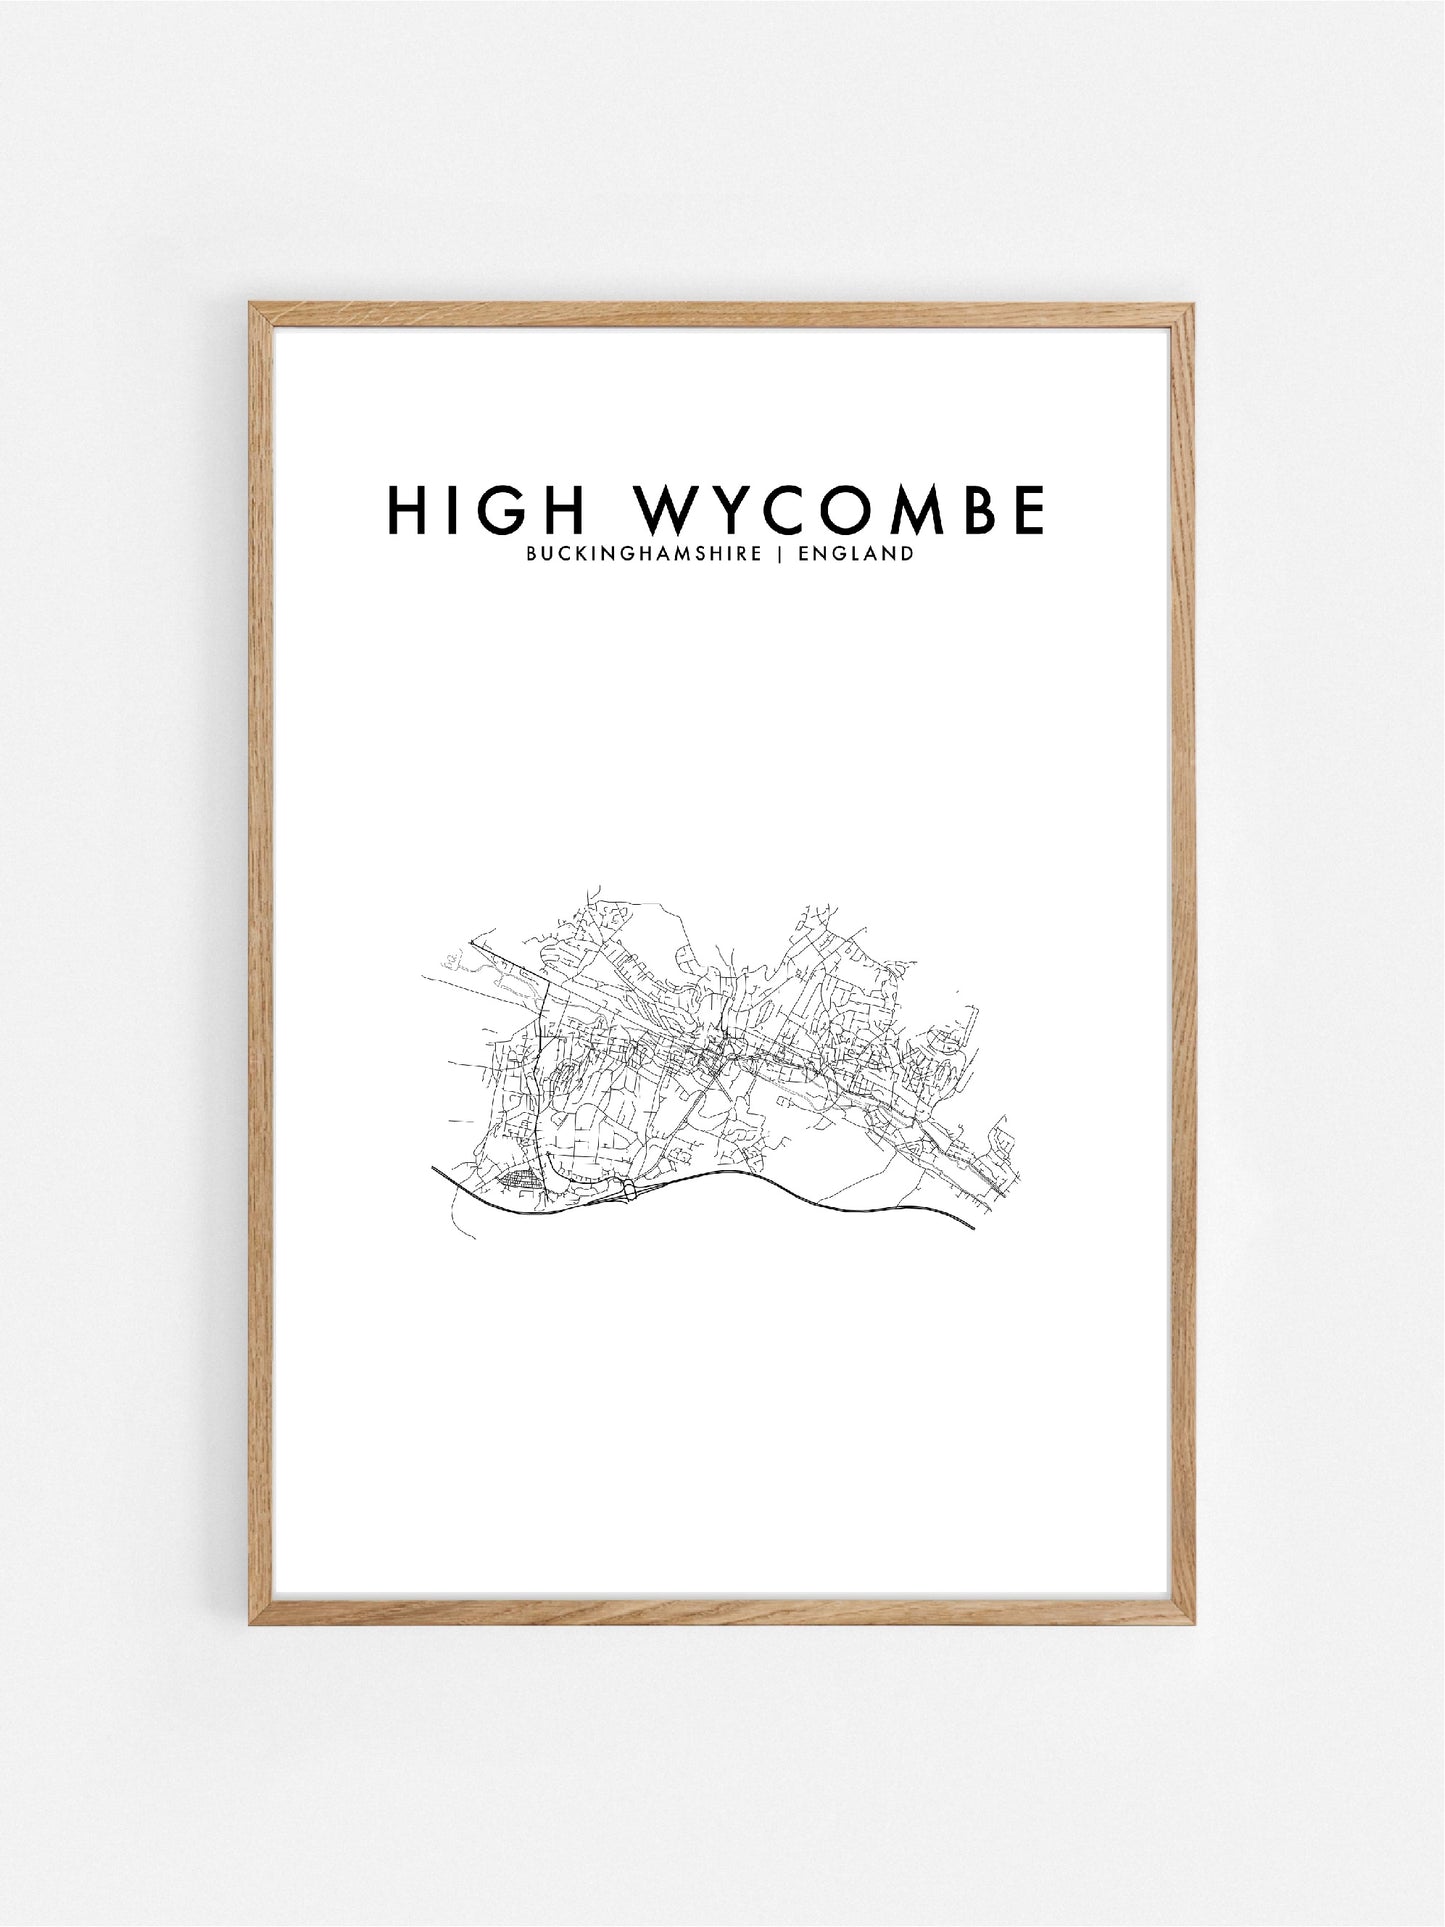 HIGH WYCOMBE, UK HOMETOWN PRINT